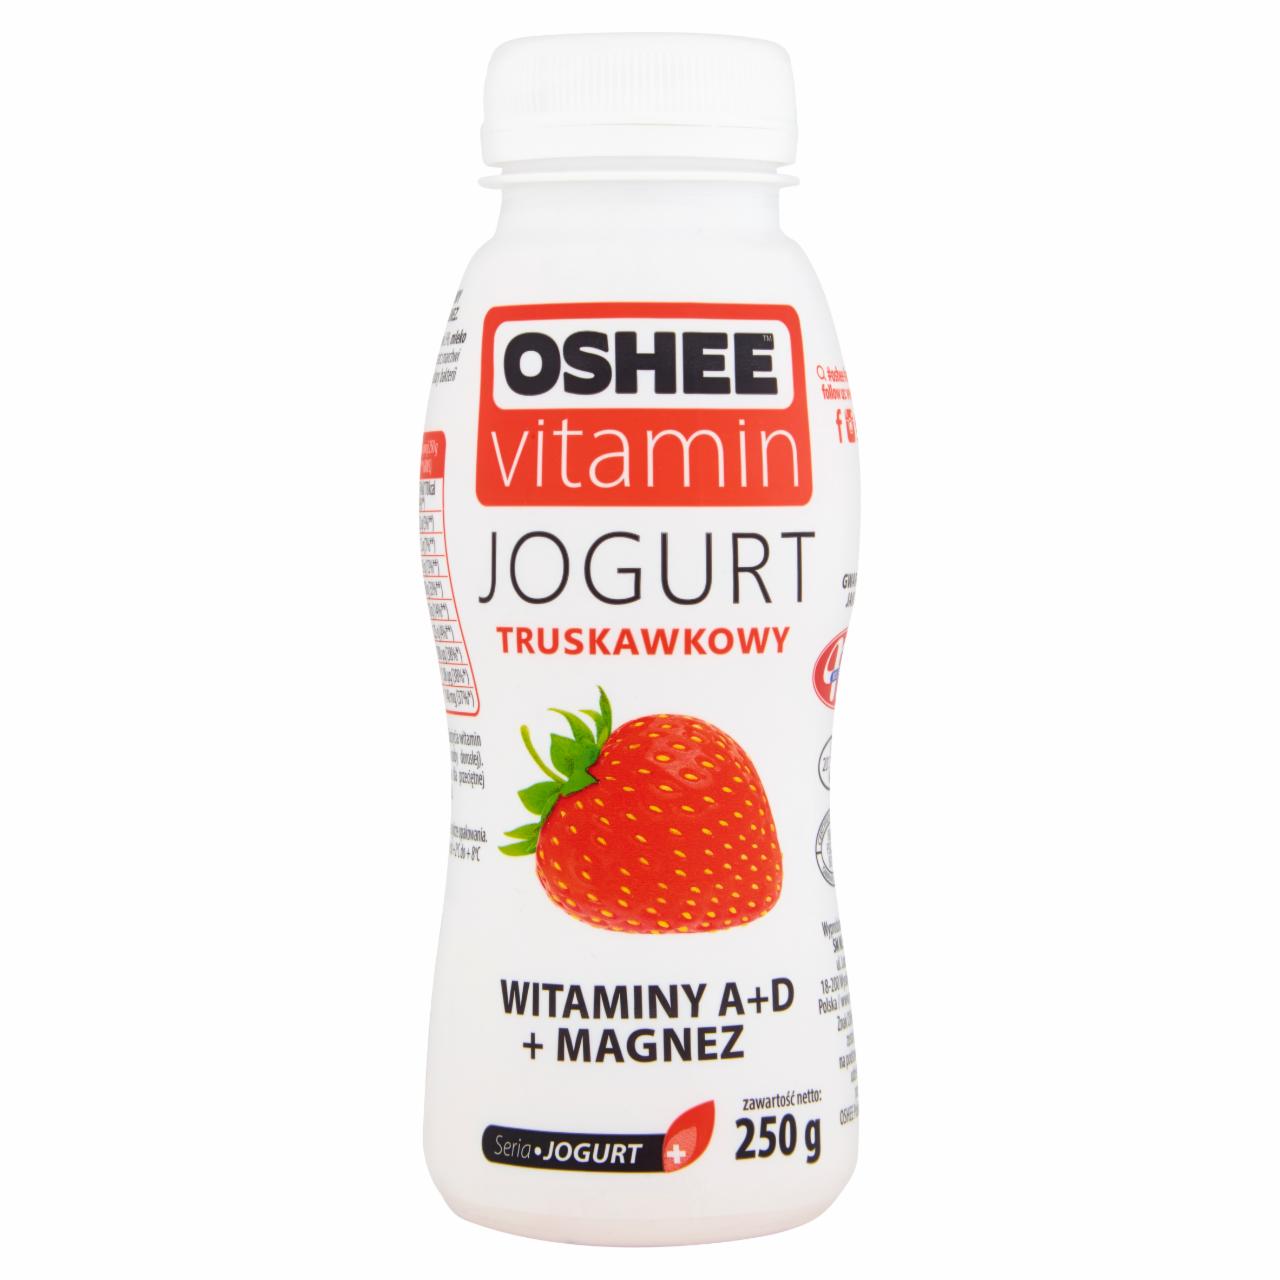 Zdjęcia - Oshee Vitamin Jogurt truskawkowy 250 g